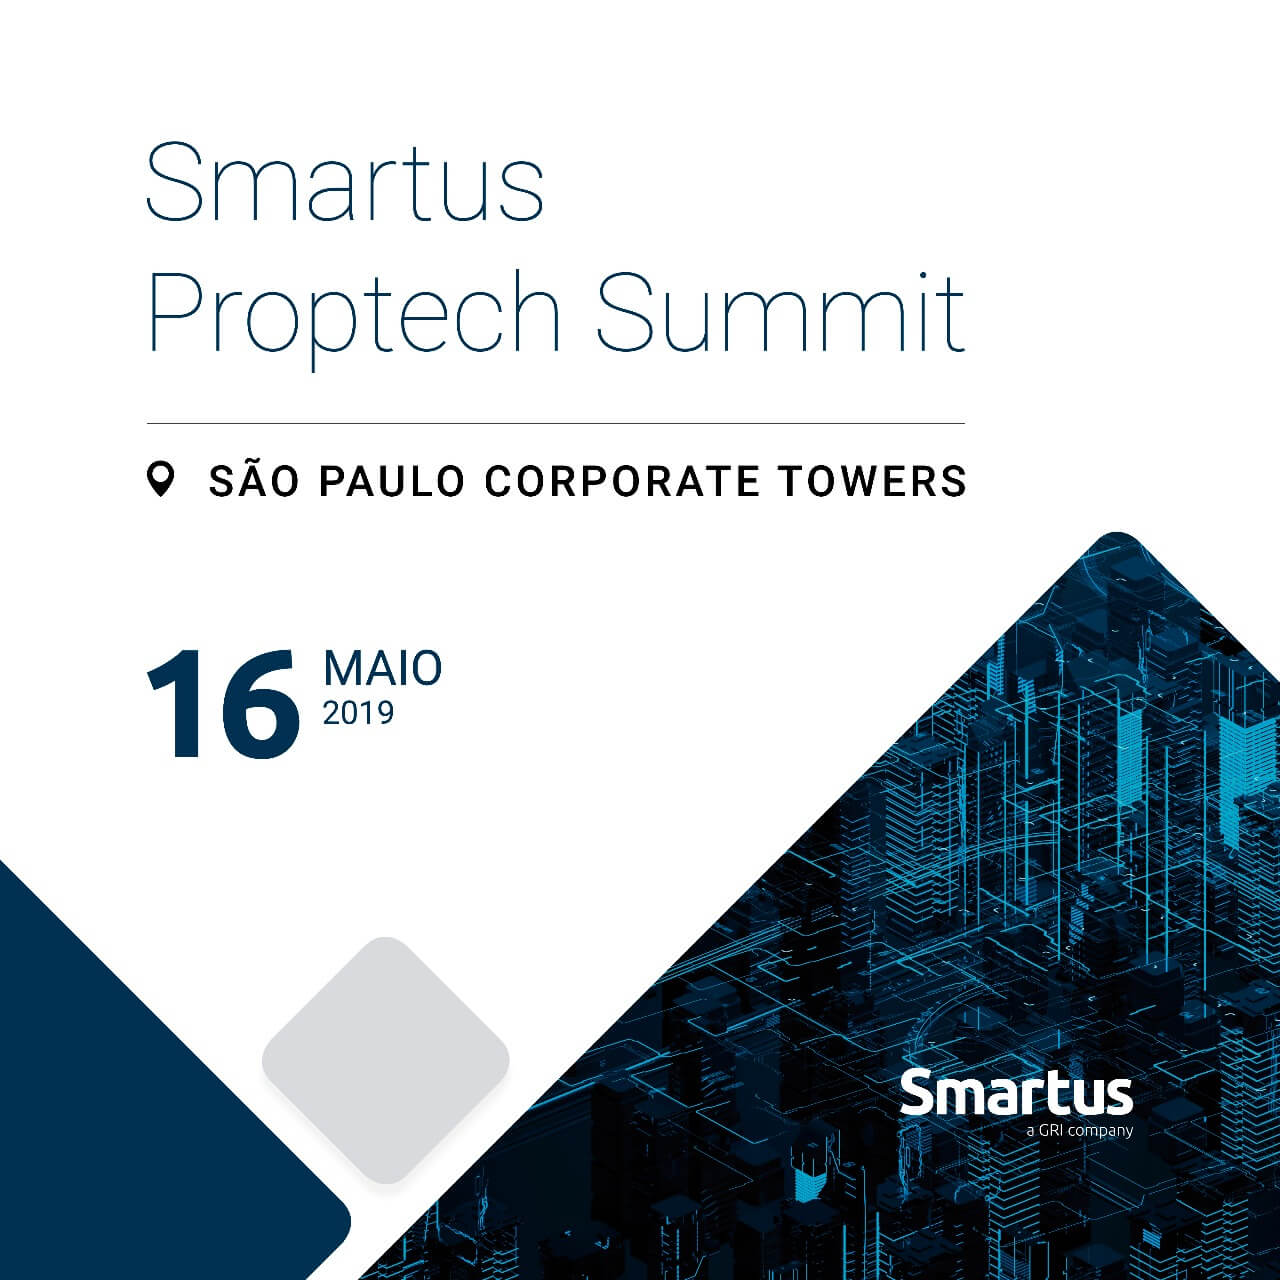 Smartus Proptech Summit 19 Smartus